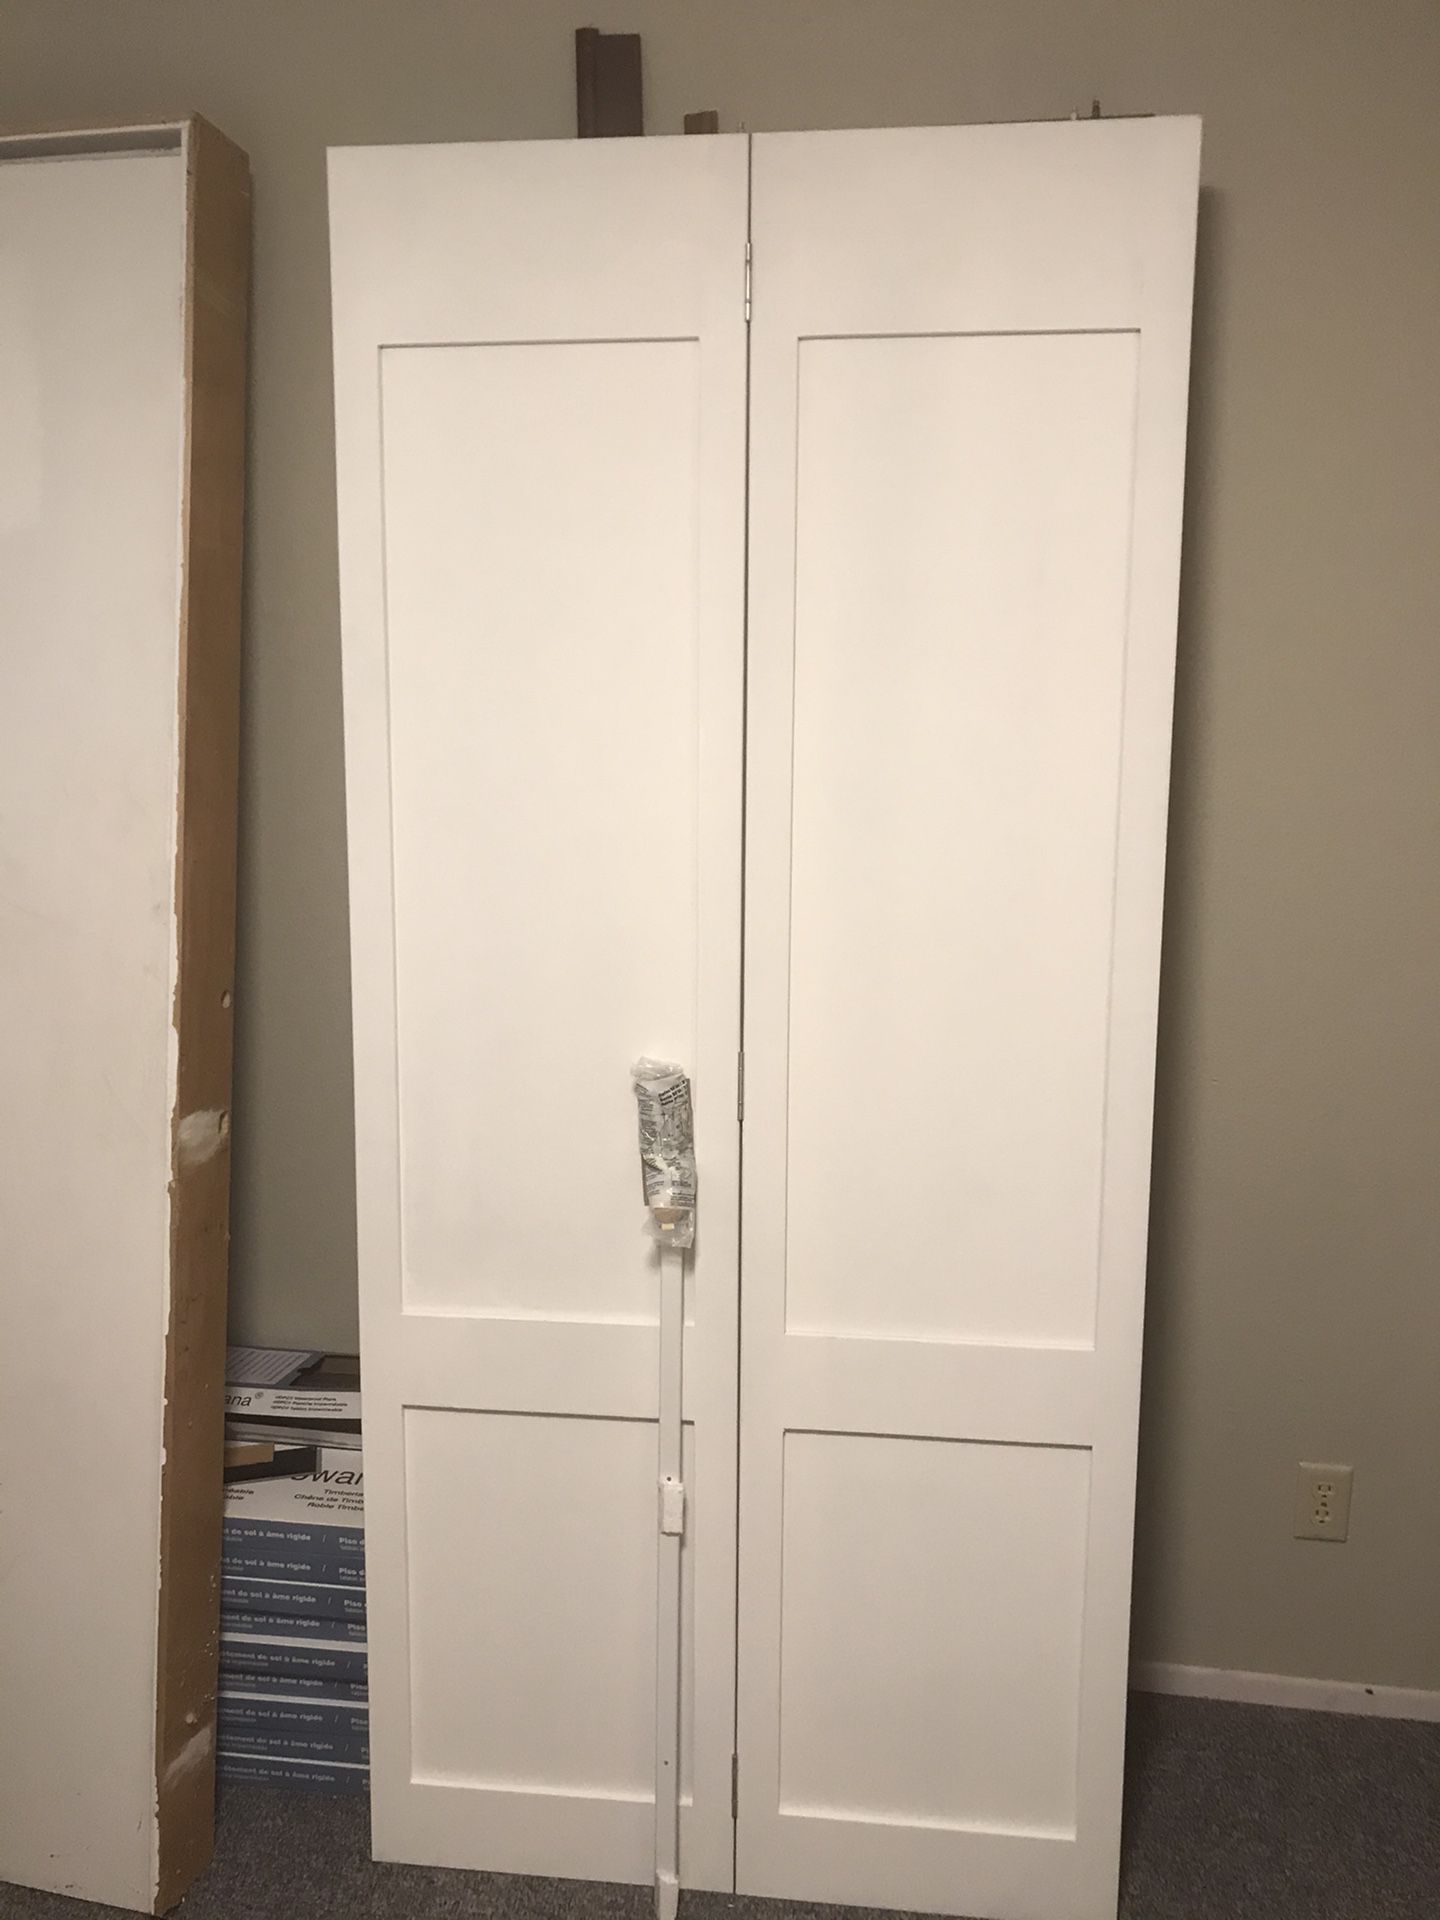 New closet Bi fold door 36”